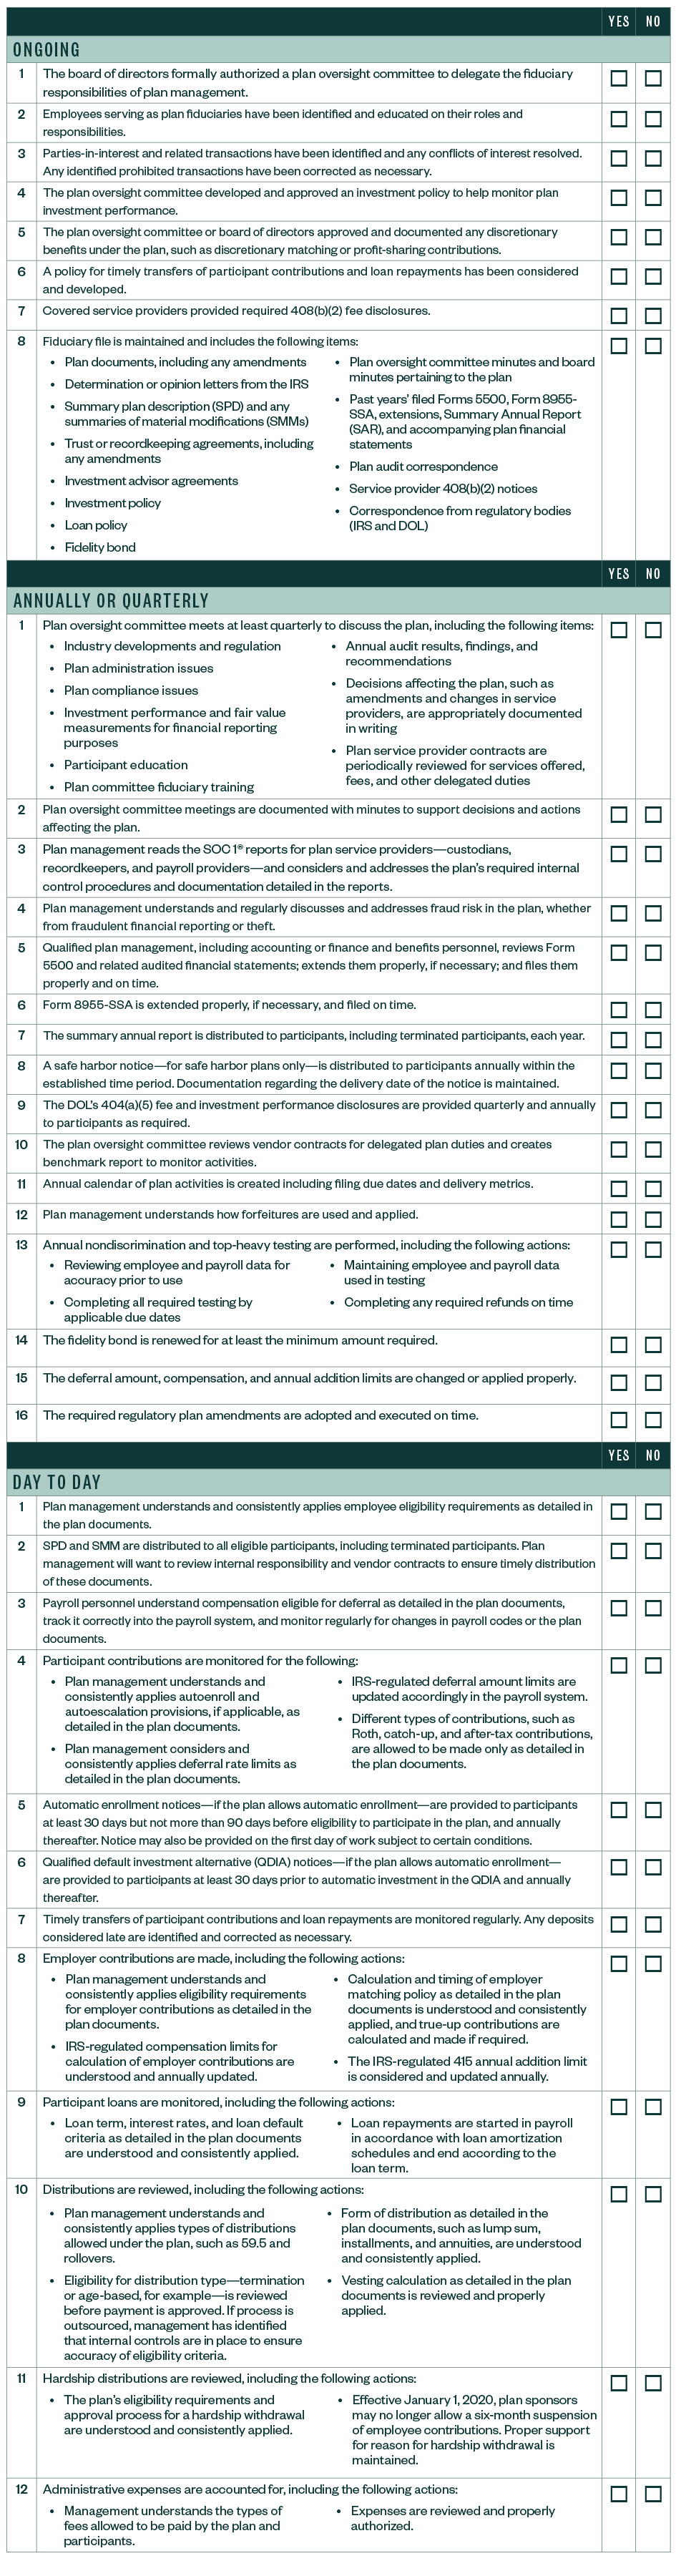 green and white colored checklist